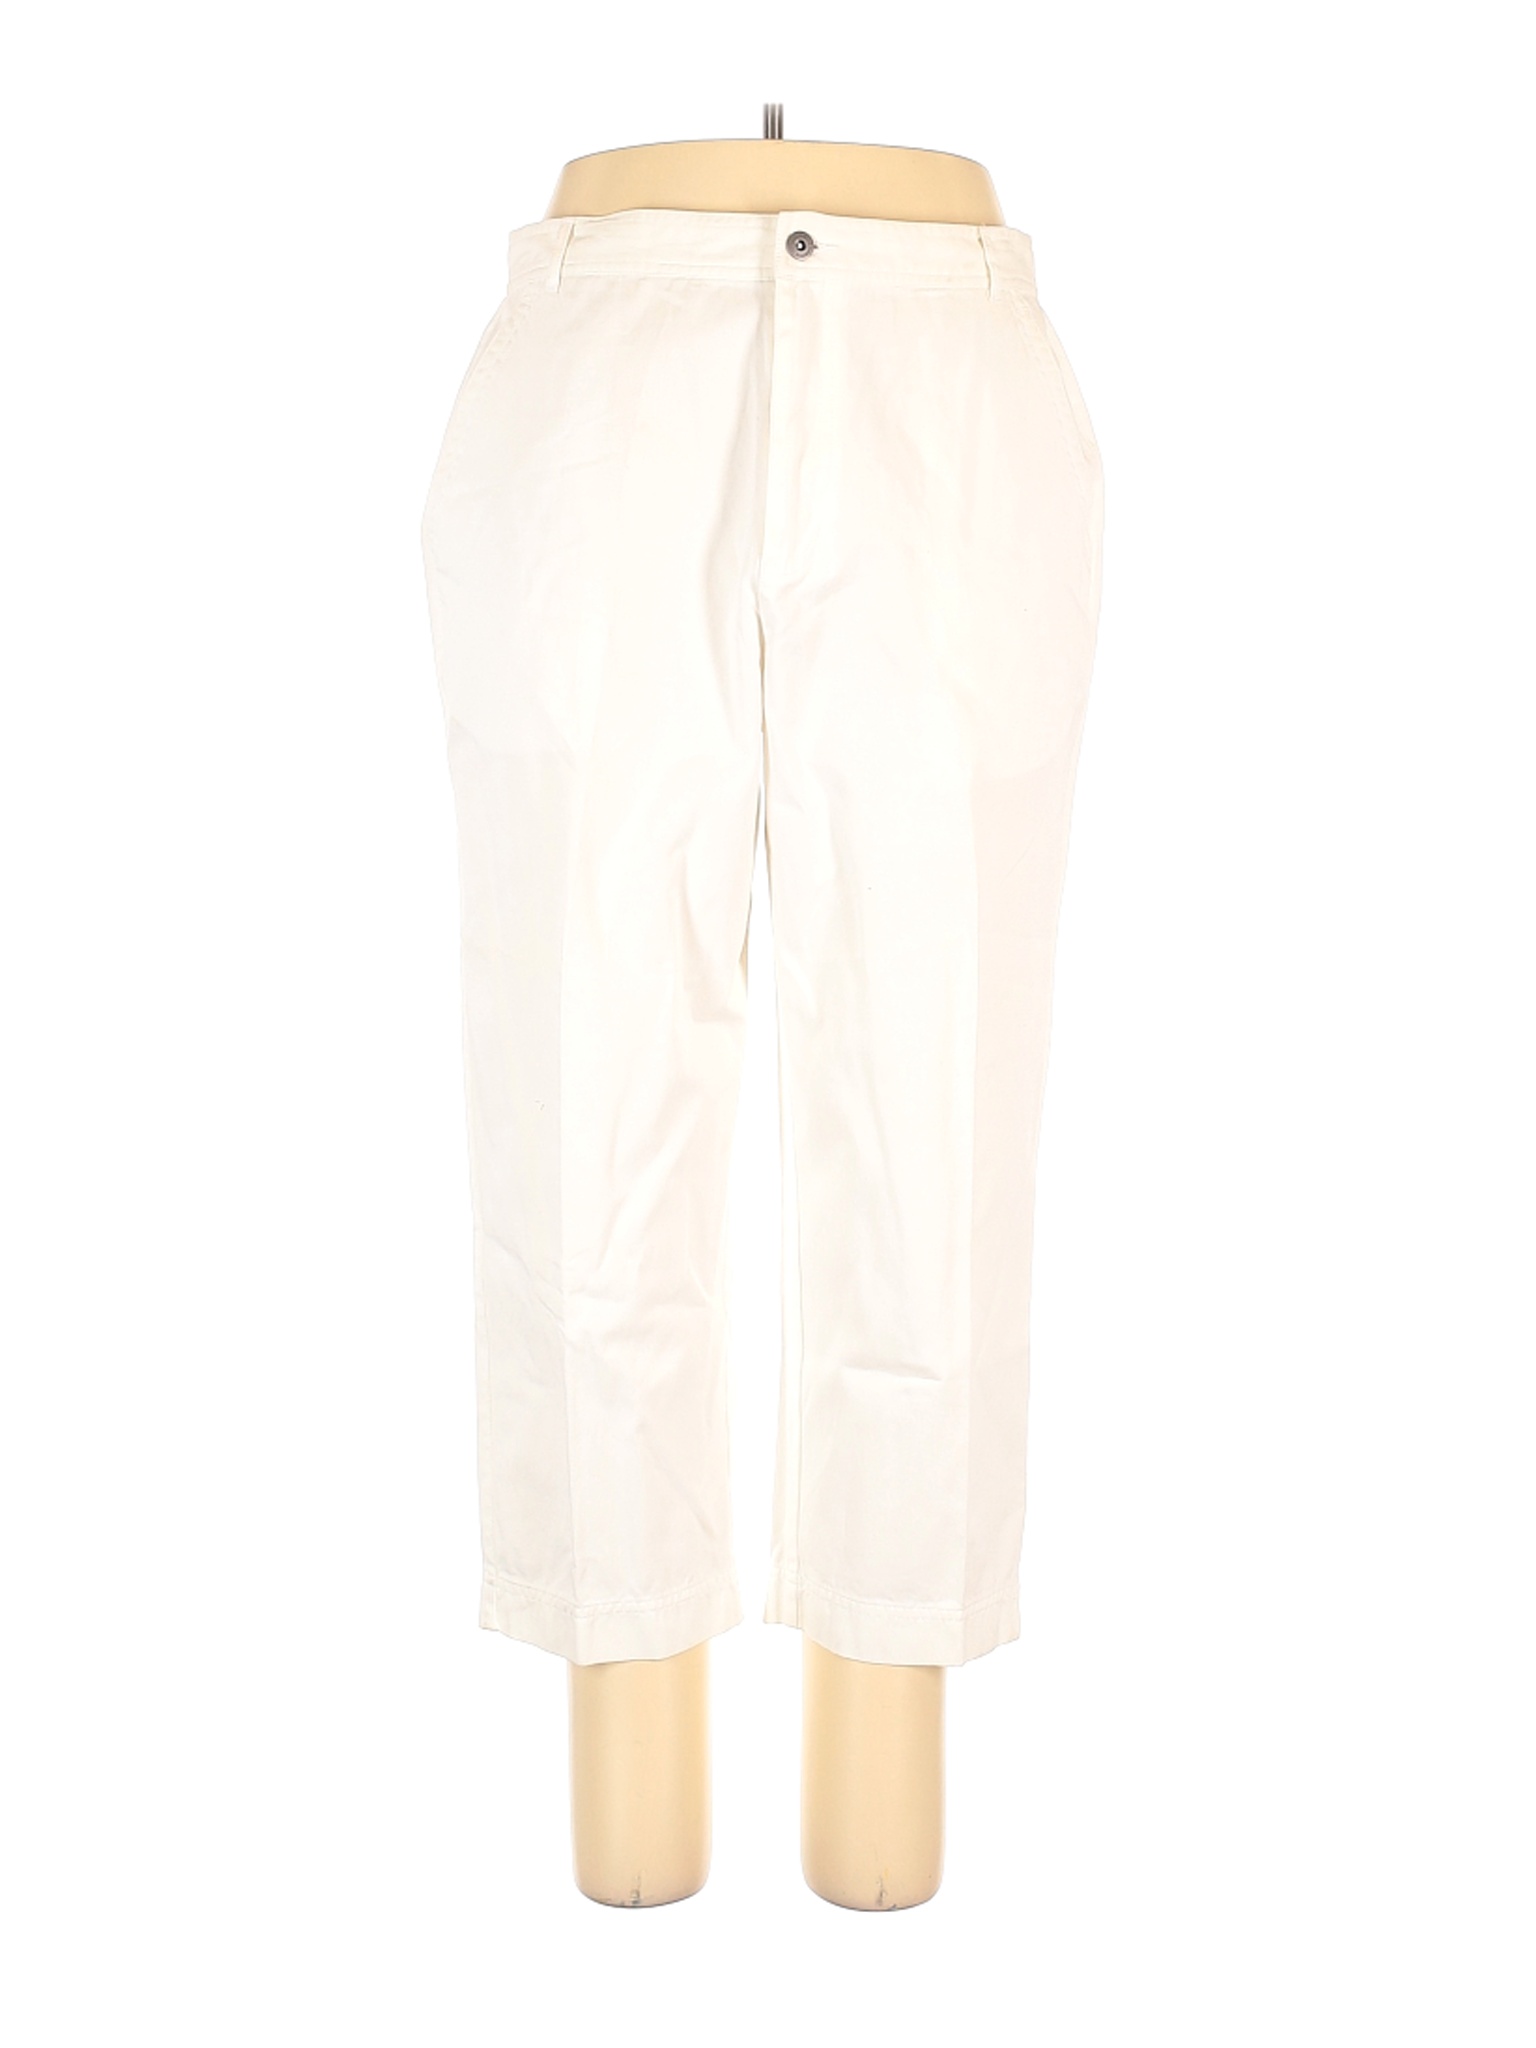 Liz Claiborne Women Ivory Dress Pants 16 | eBay